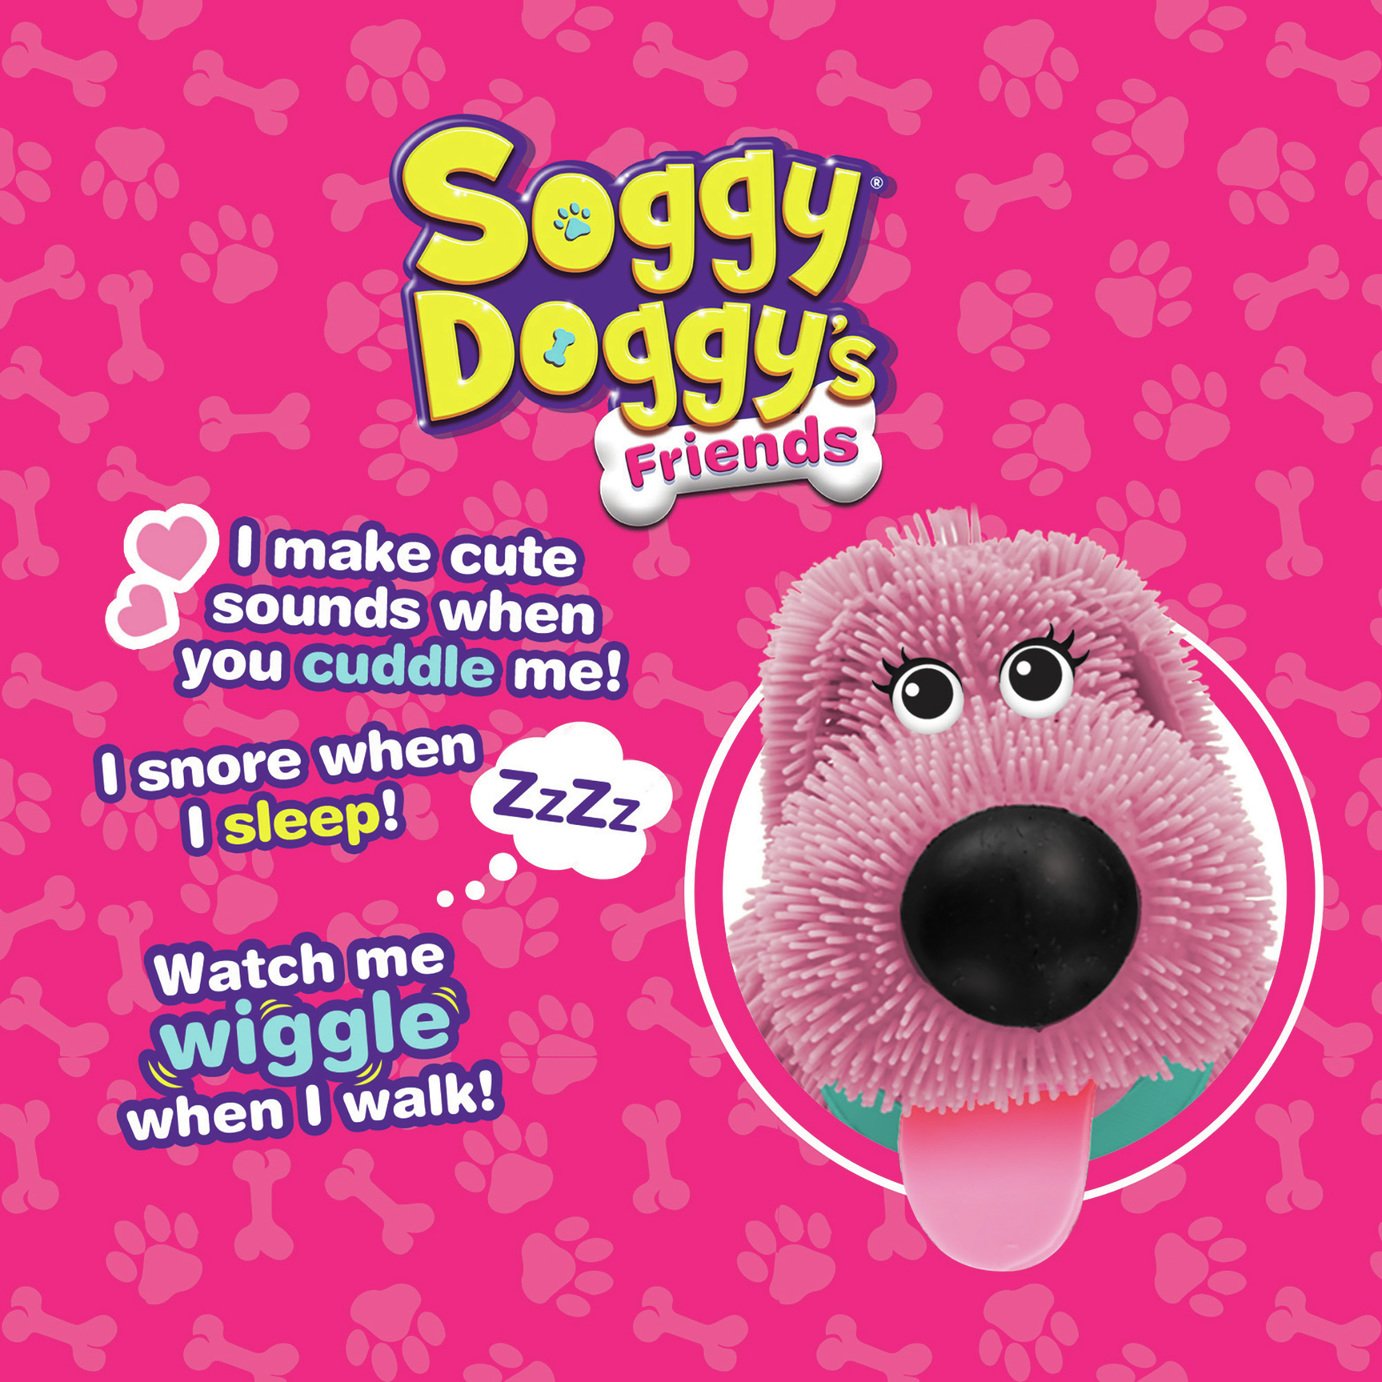 soggy doggy walking toy